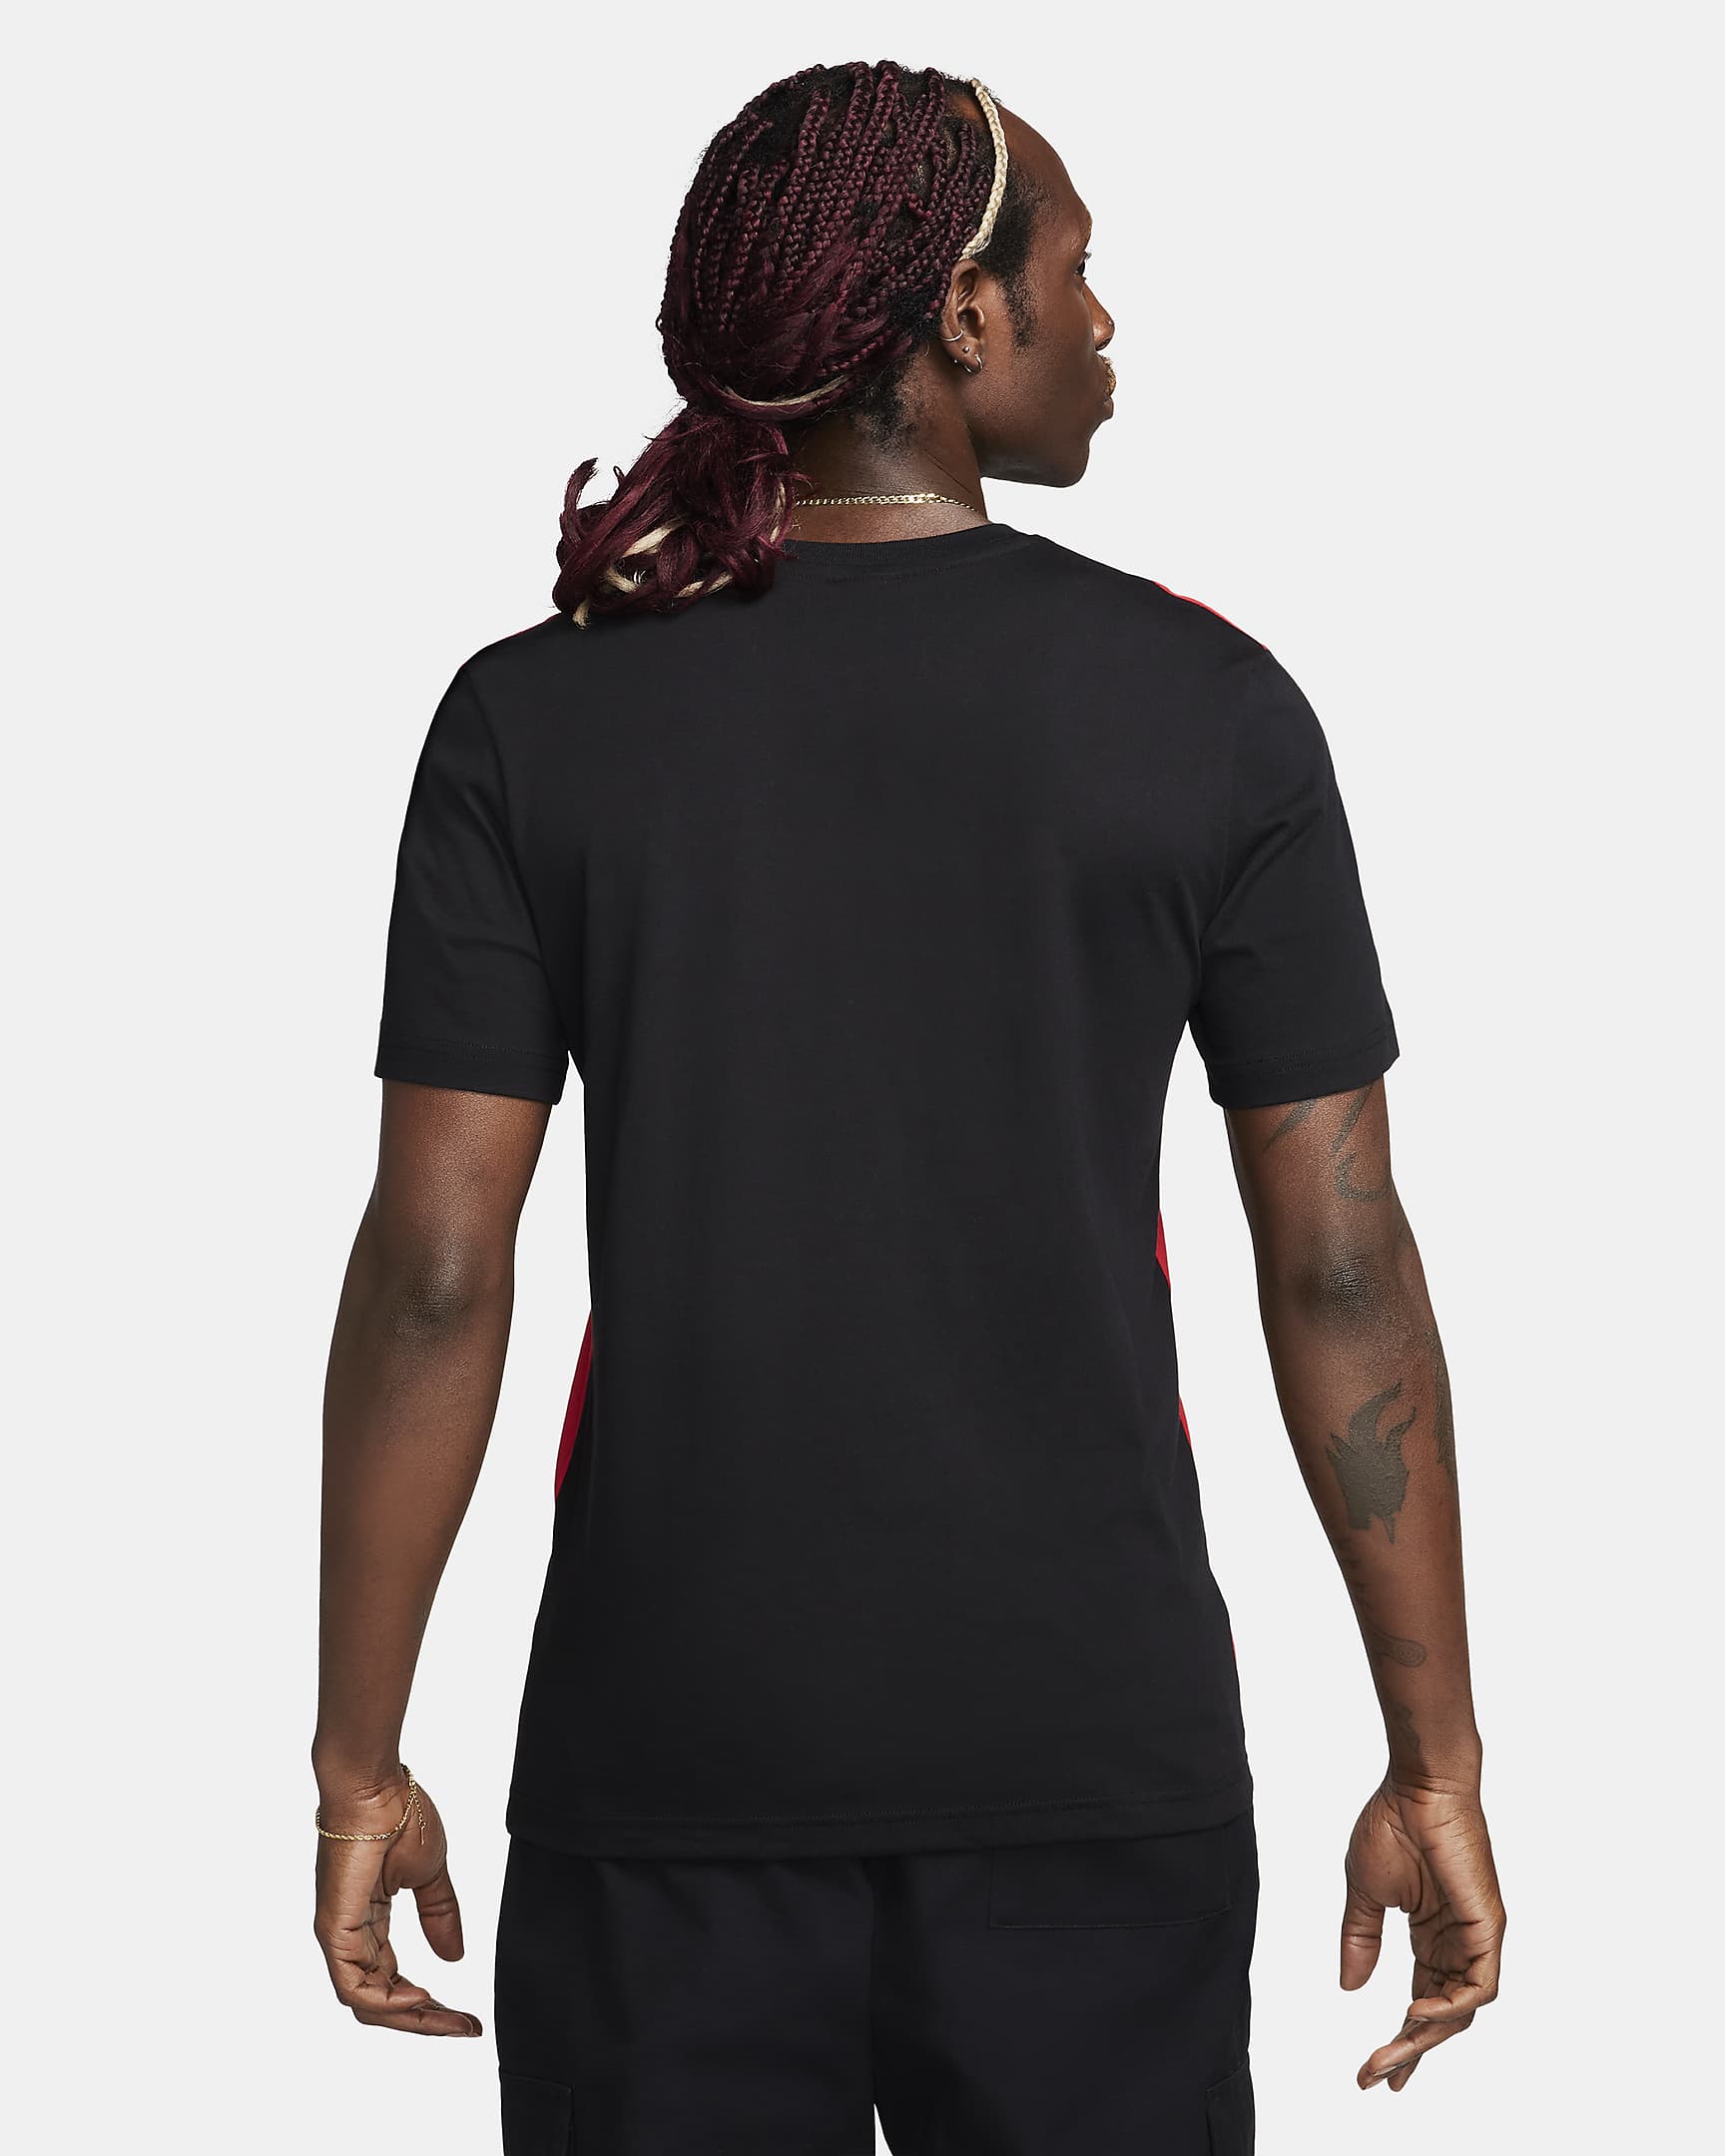 Nike Air Men's Short-Sleeve Top. Nike CH